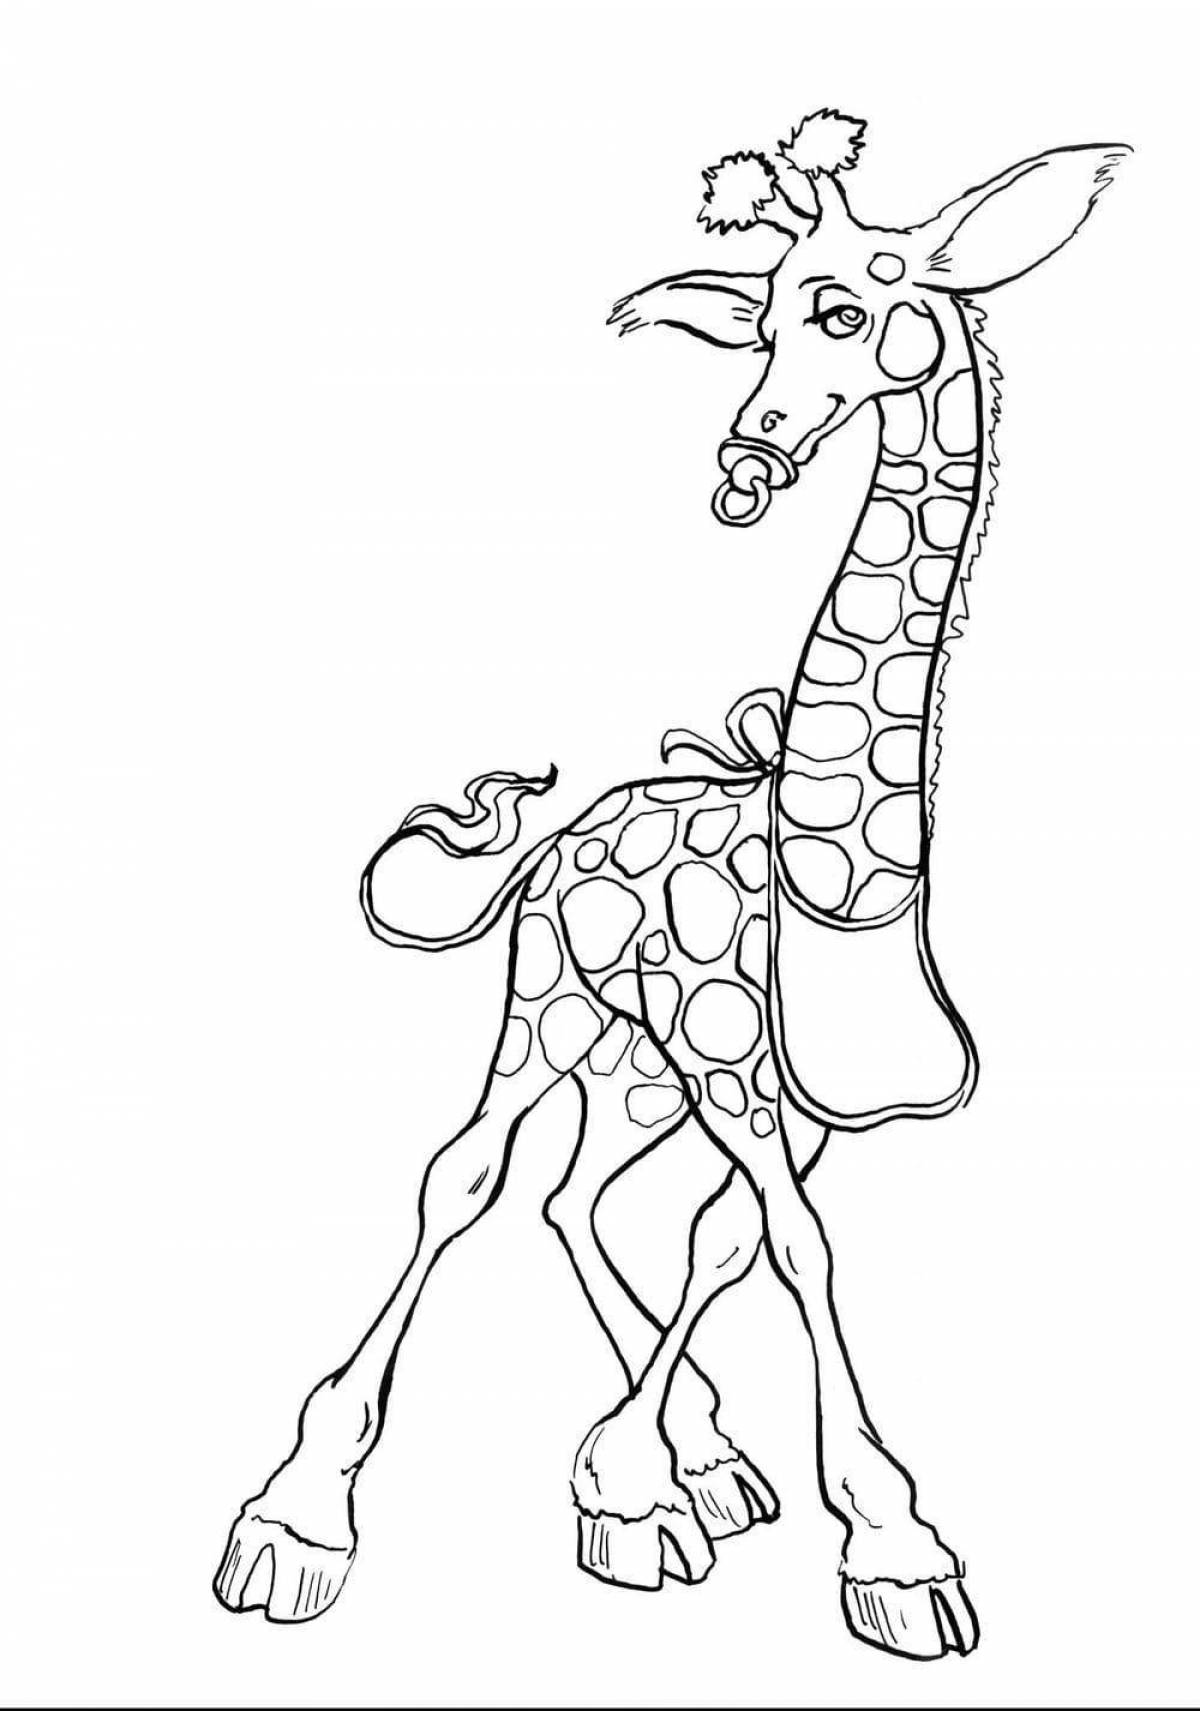 Юмористический жираф adopt mi coloring page